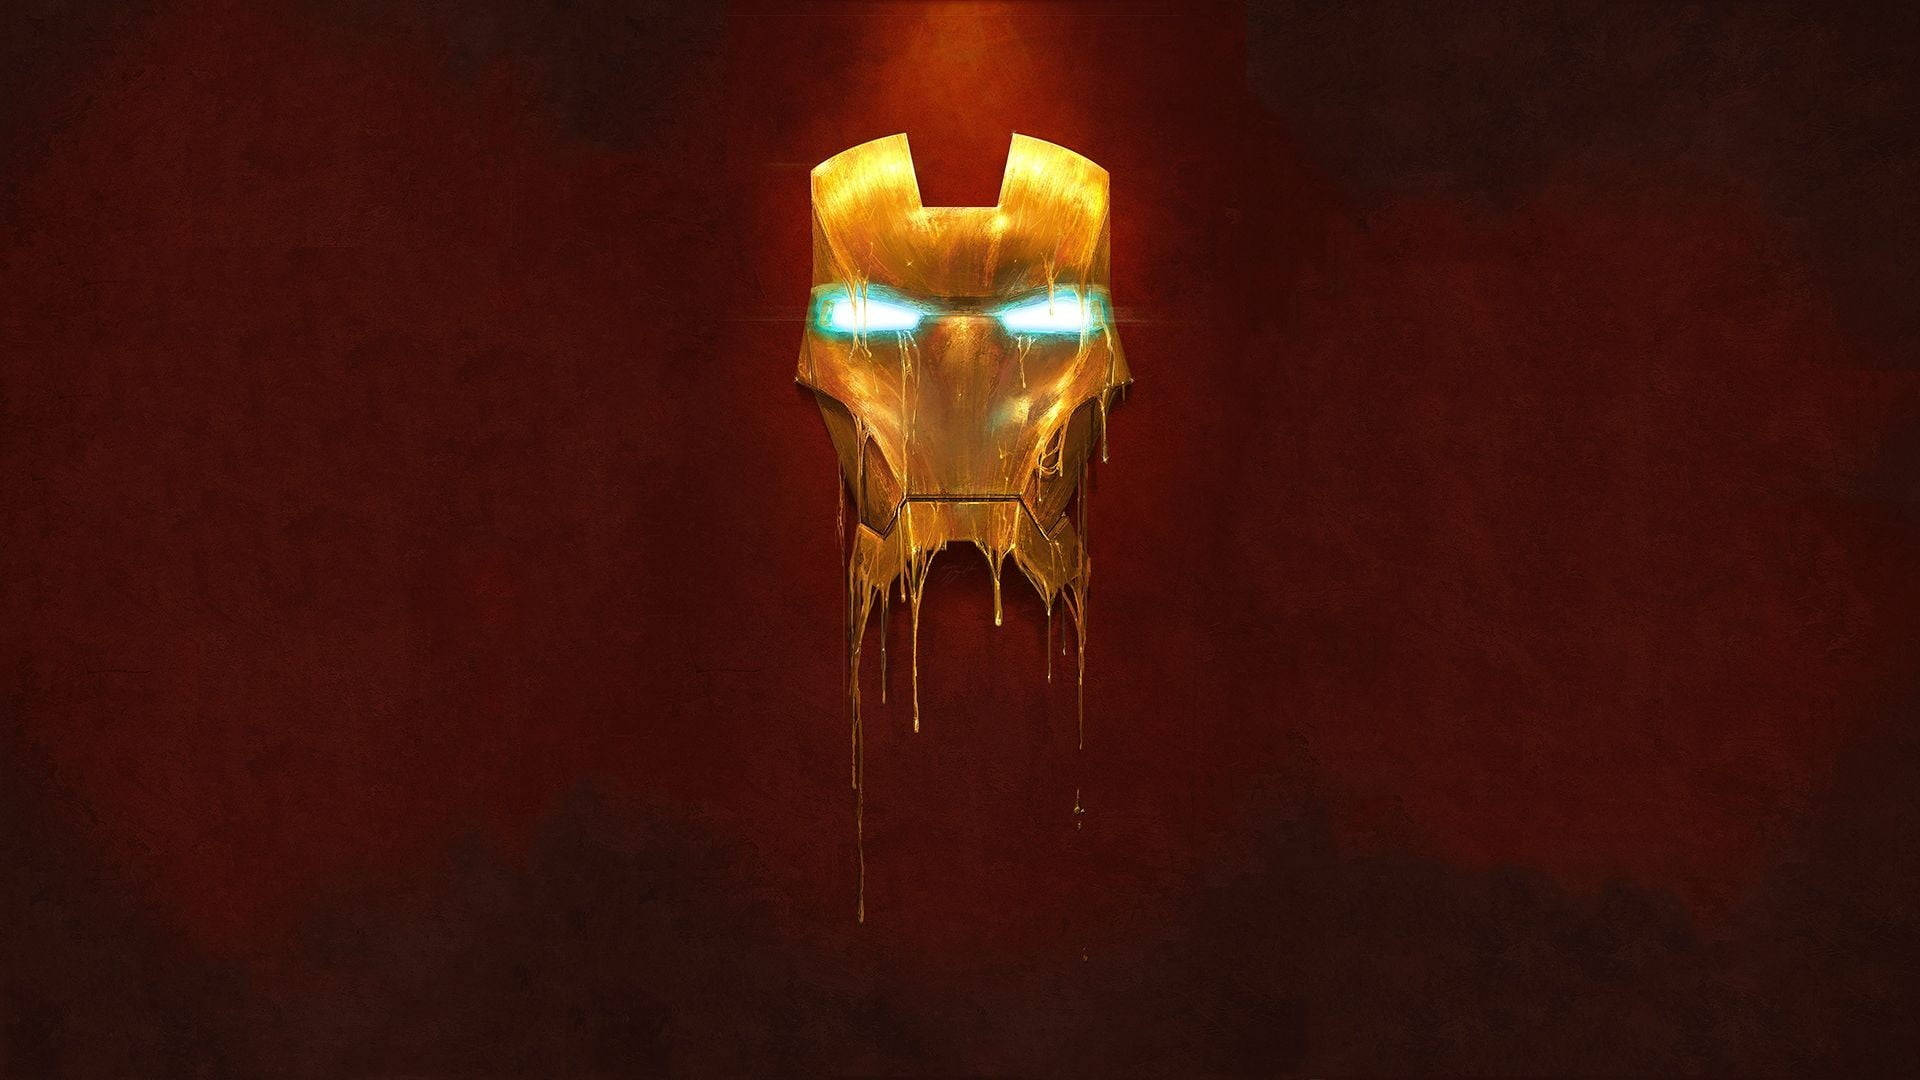 Hd Superhero Iron Man Helmet Wallpaper